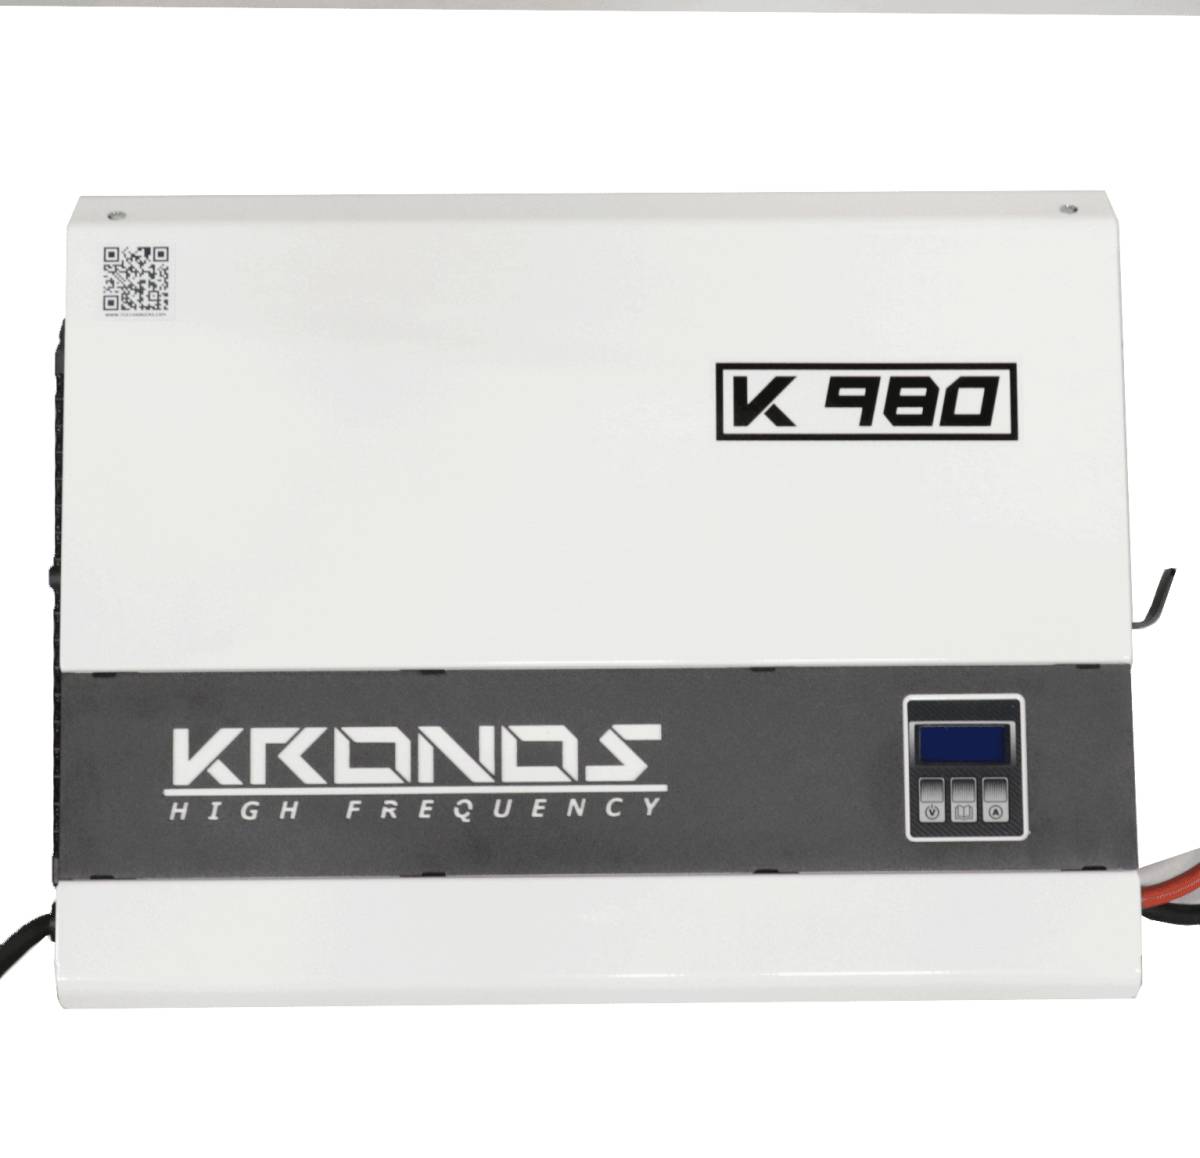 Q-Batterie Caricabatterie ad alta frequenza K980 - 72-80V, 10-80A - KRONOS